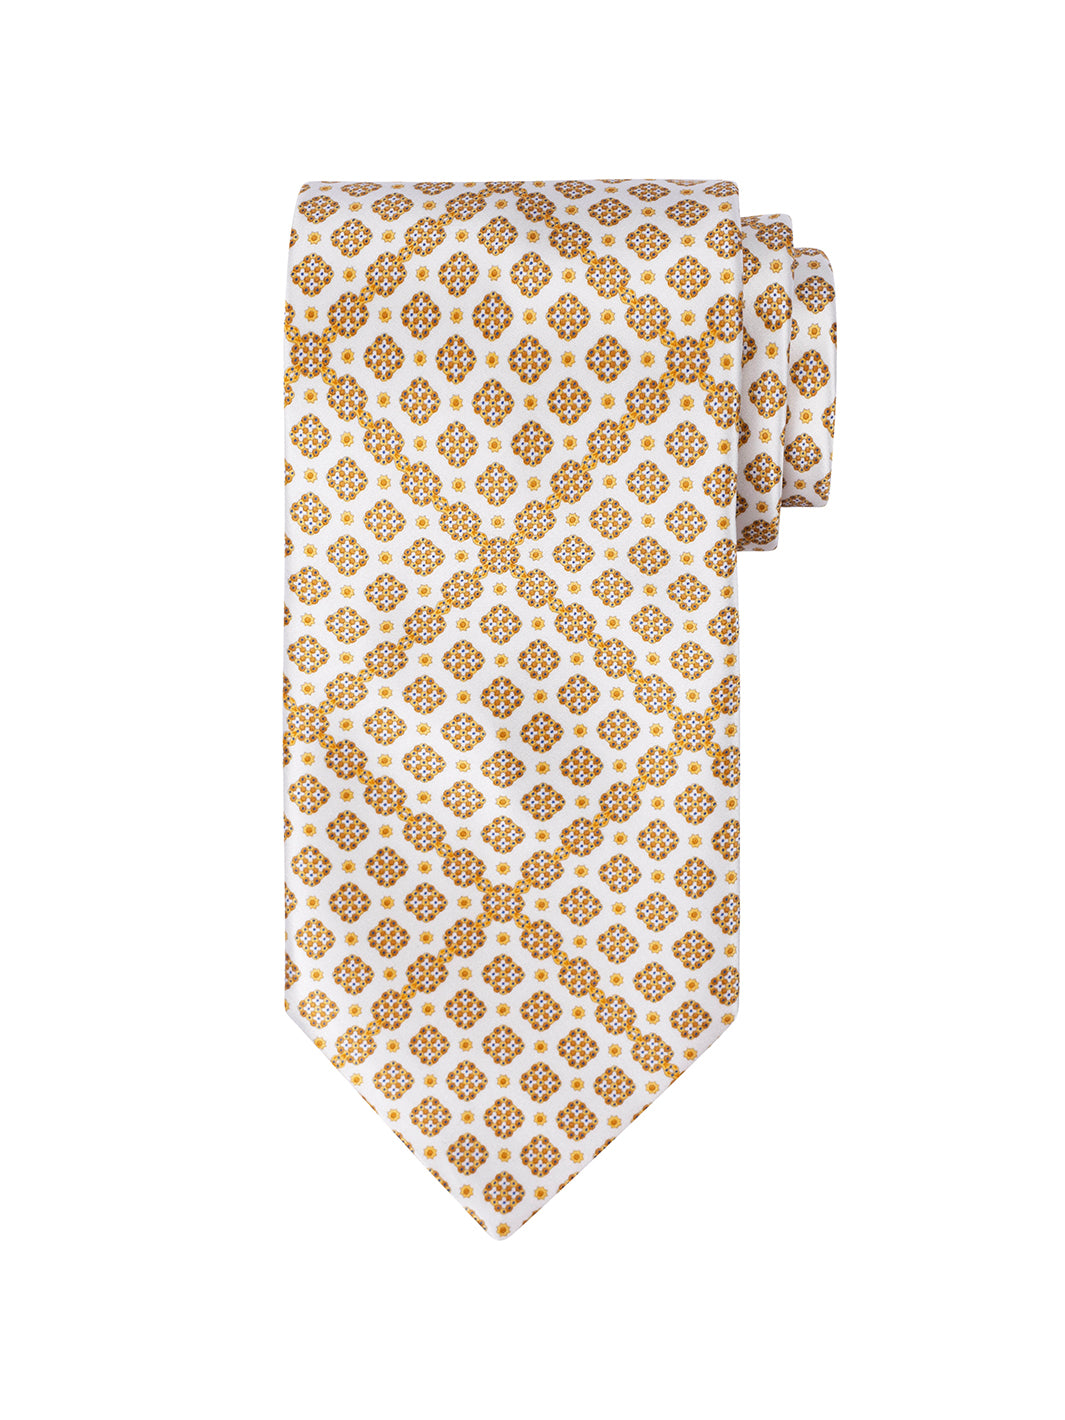 Stefano Ricci White and Gold Tie